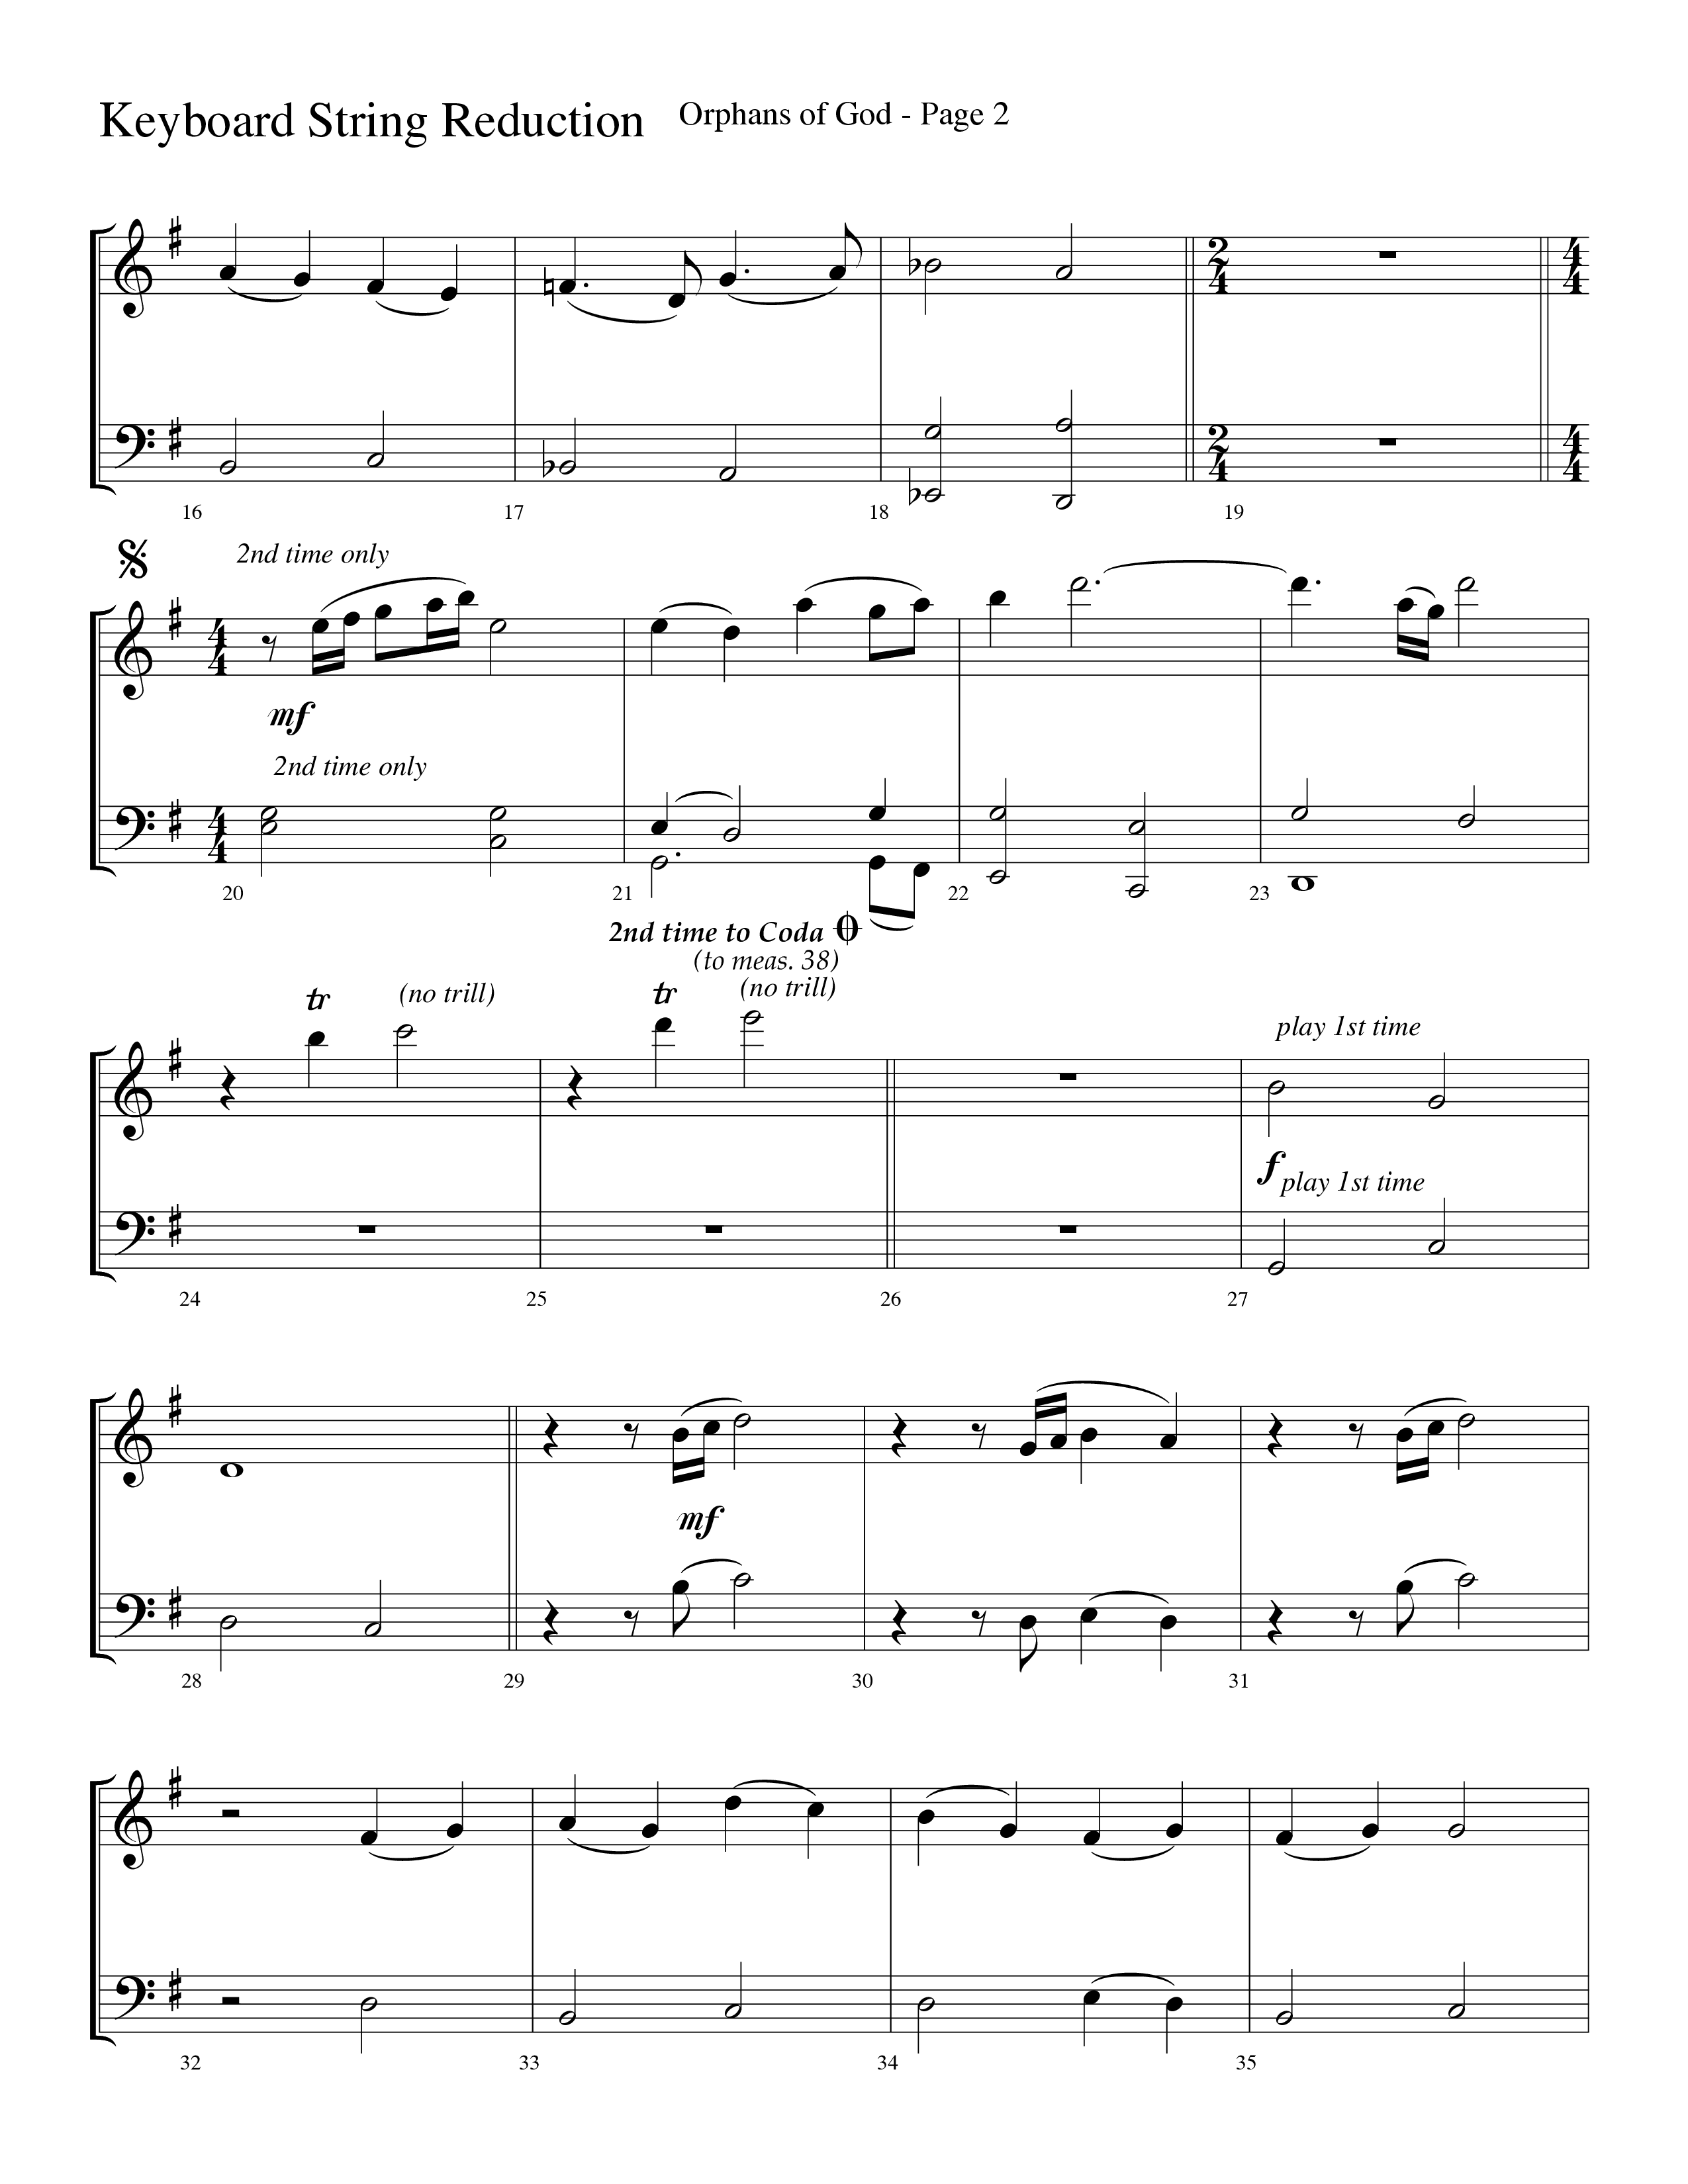 Orphans Of God (Choral Anthem SATB) String Reduction (Lifeway Choral / Arr. Dave Williamson)